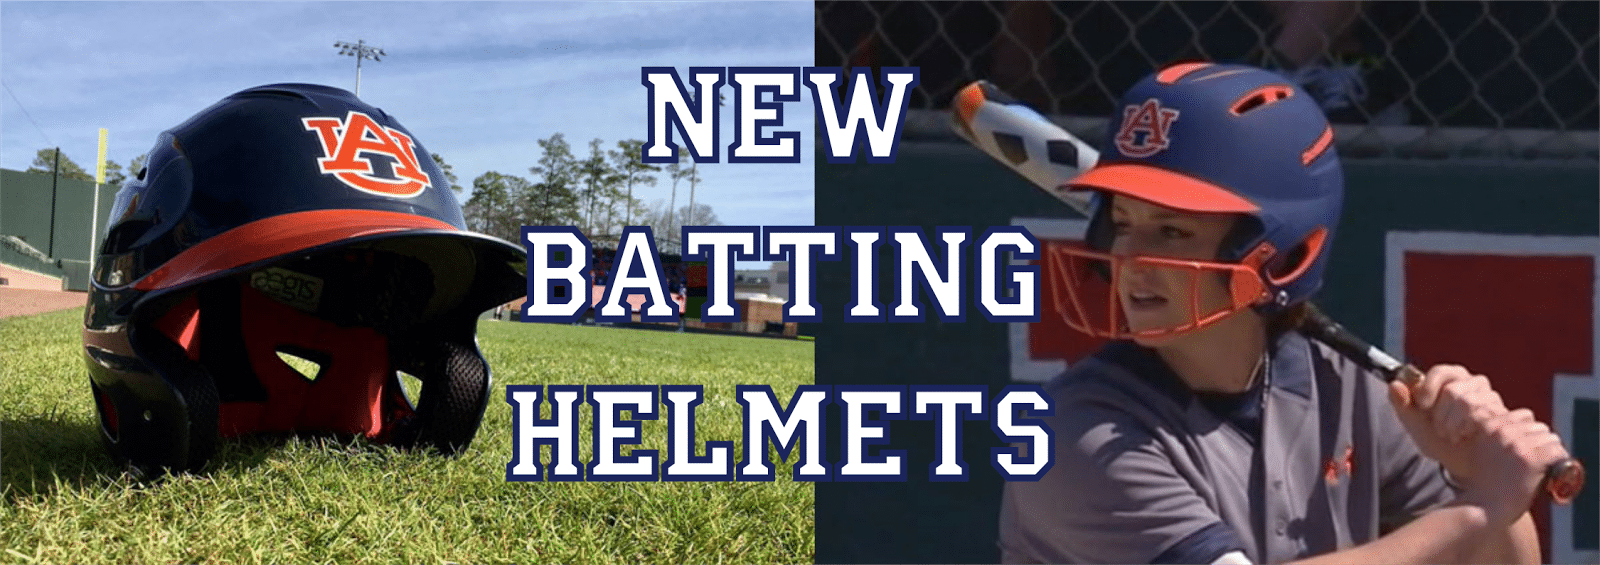 auburn baseball softball batting helmet